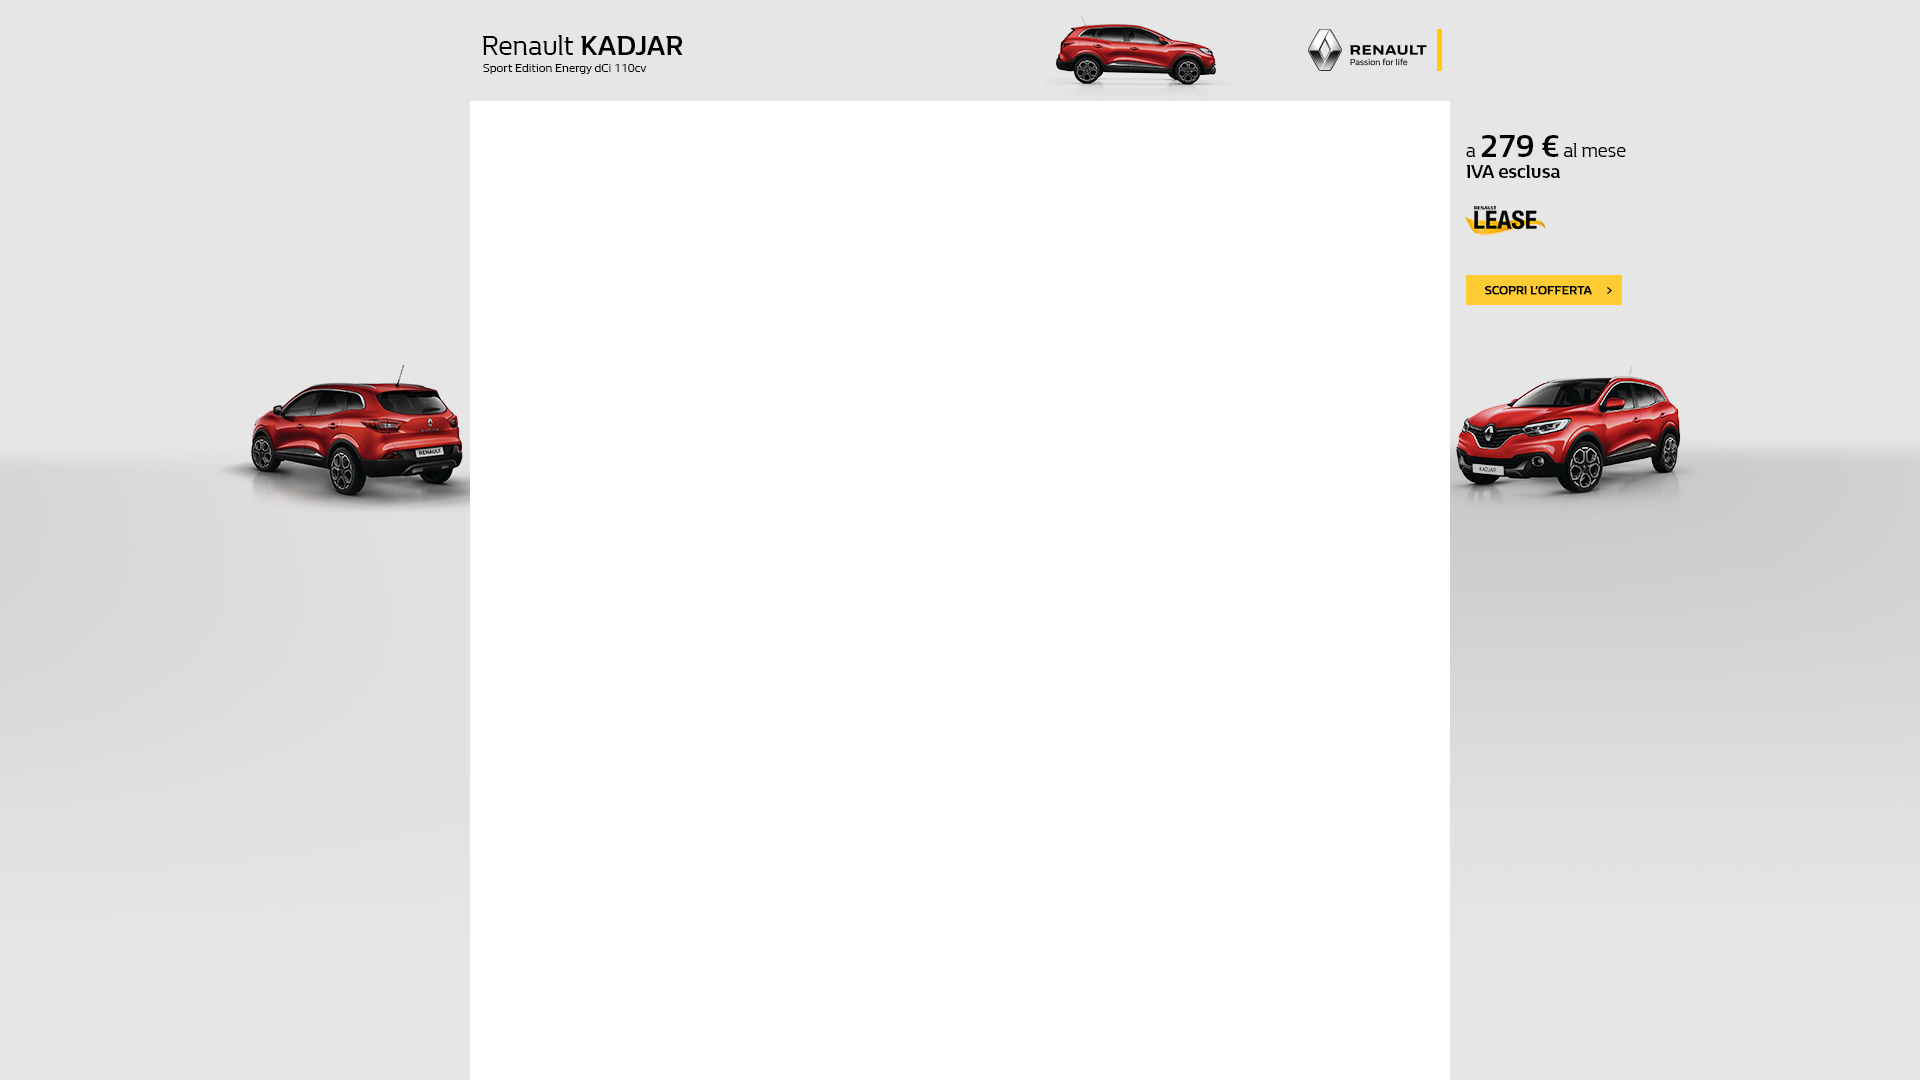 Renault 2018 04 Kadjar - 1920x1080 Pixels